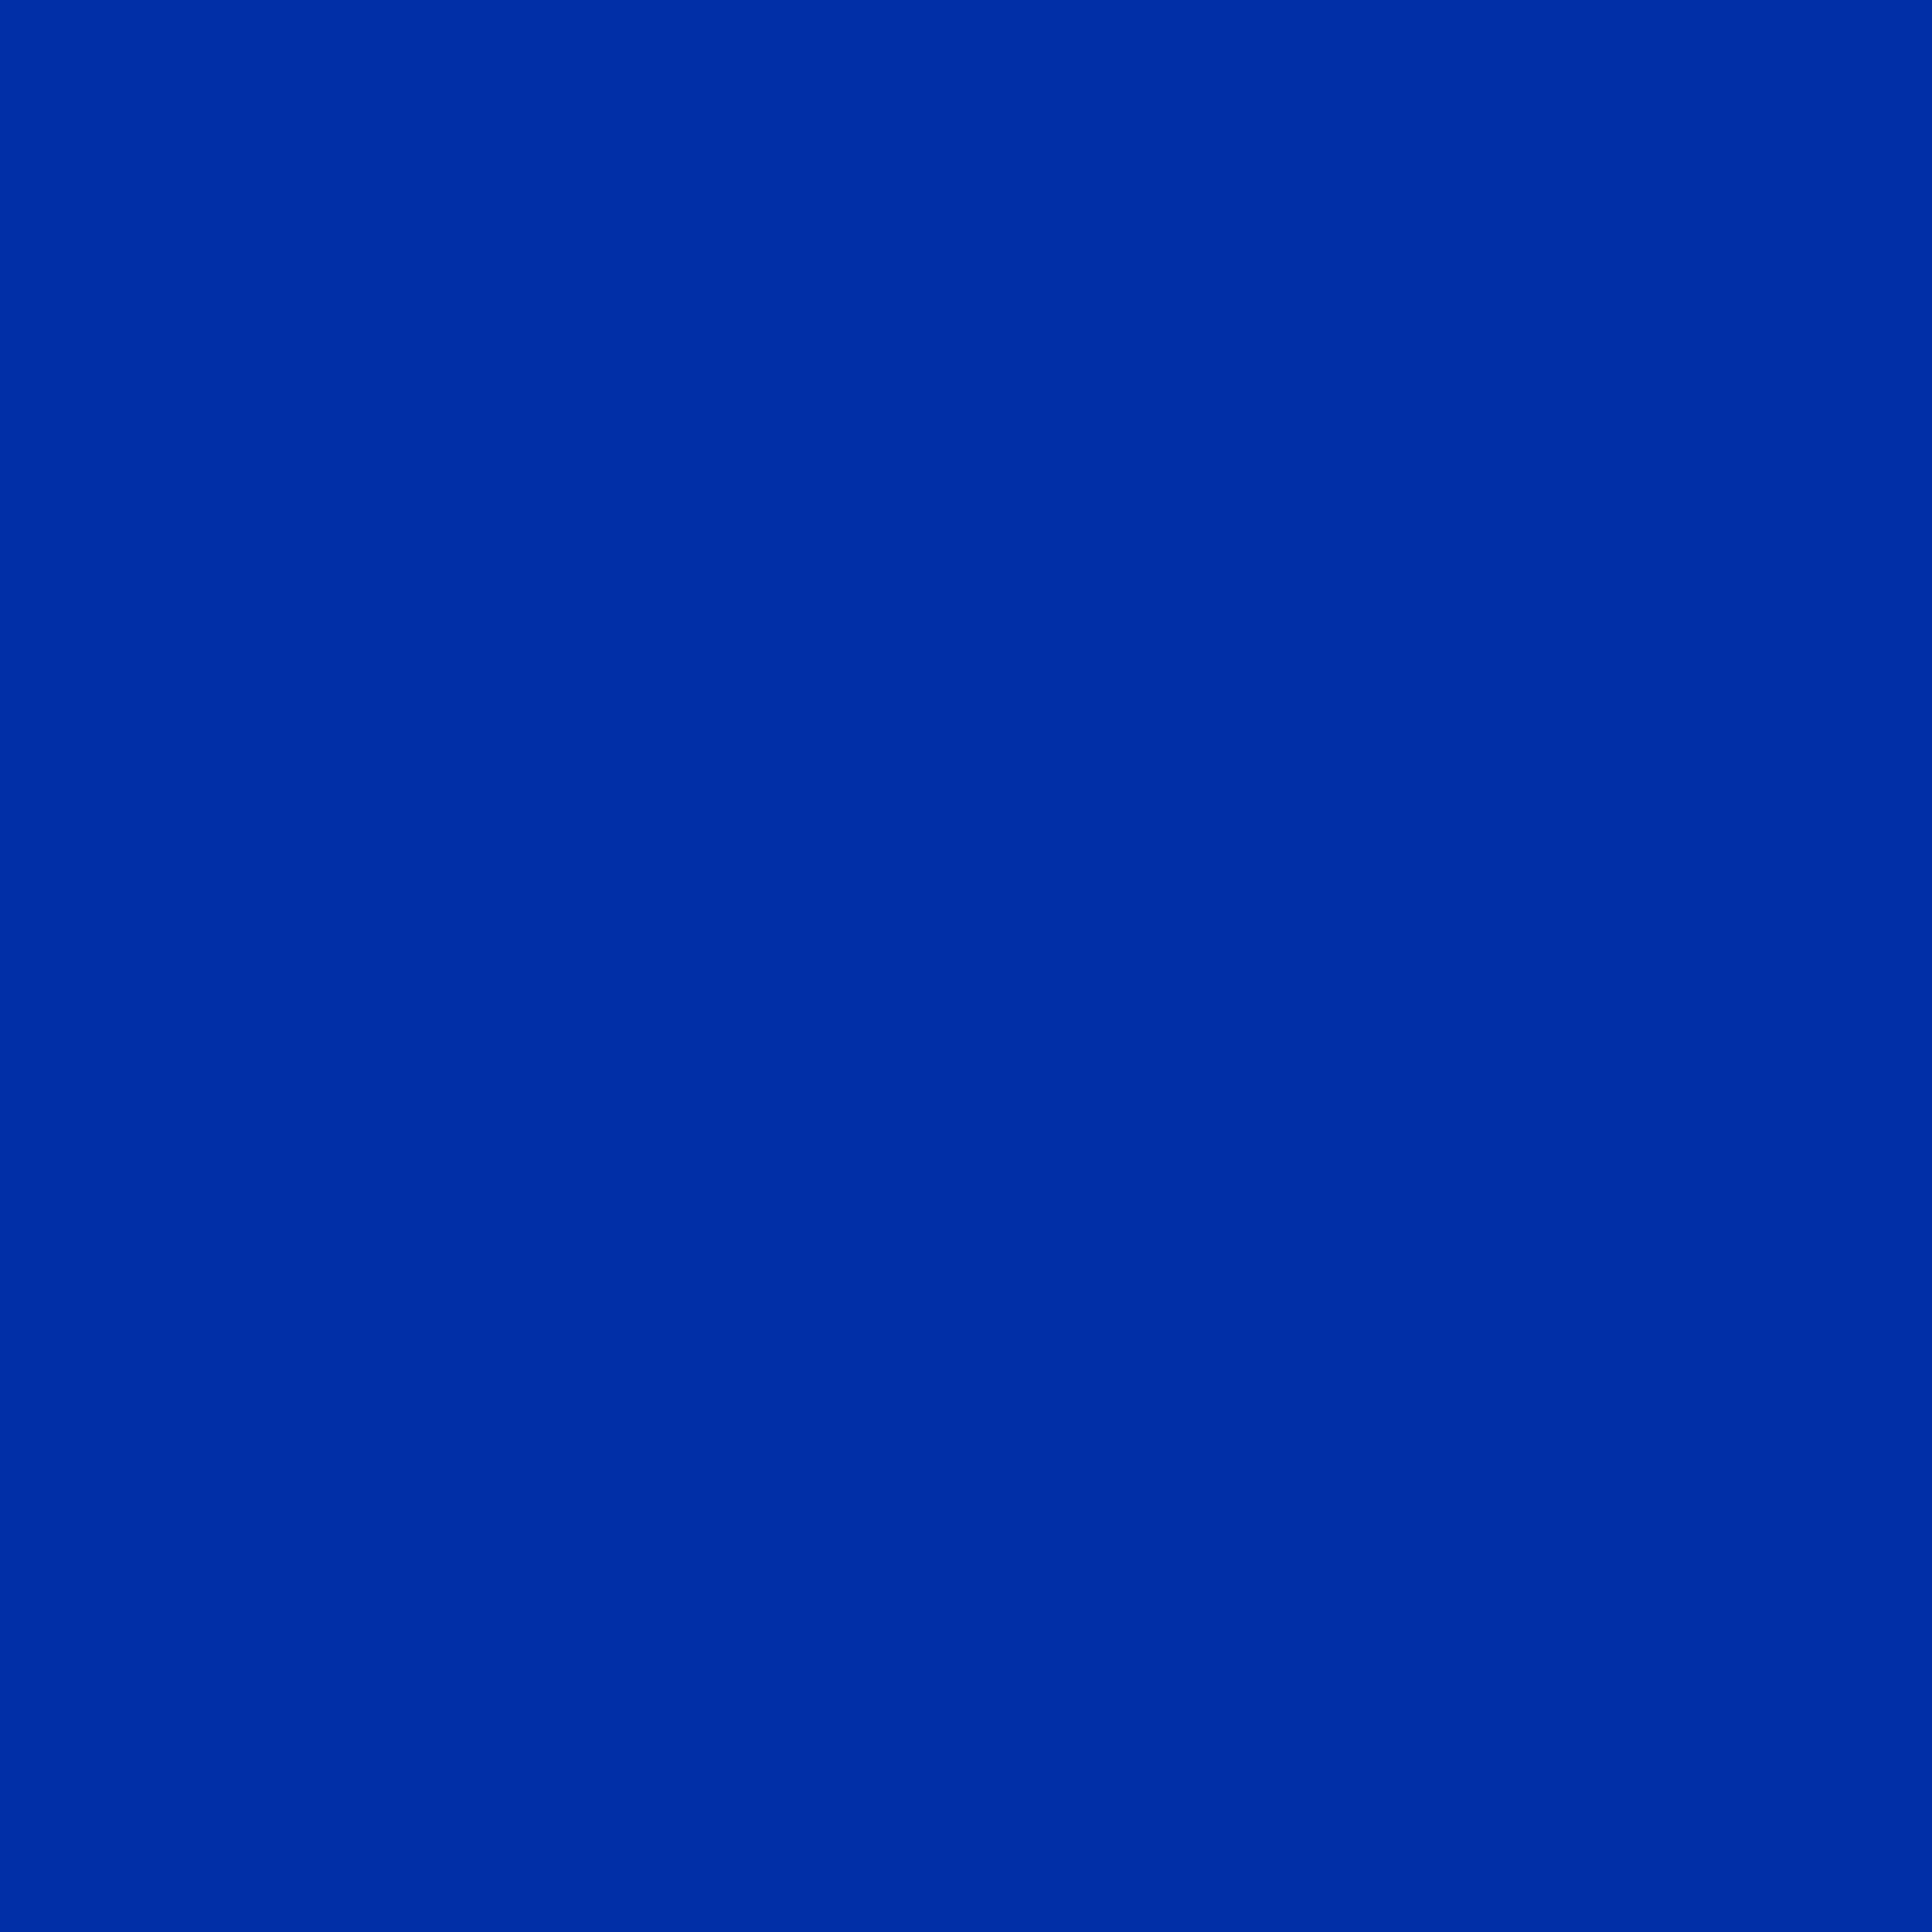 2732x2732 International Klein Blue Solid Color Background